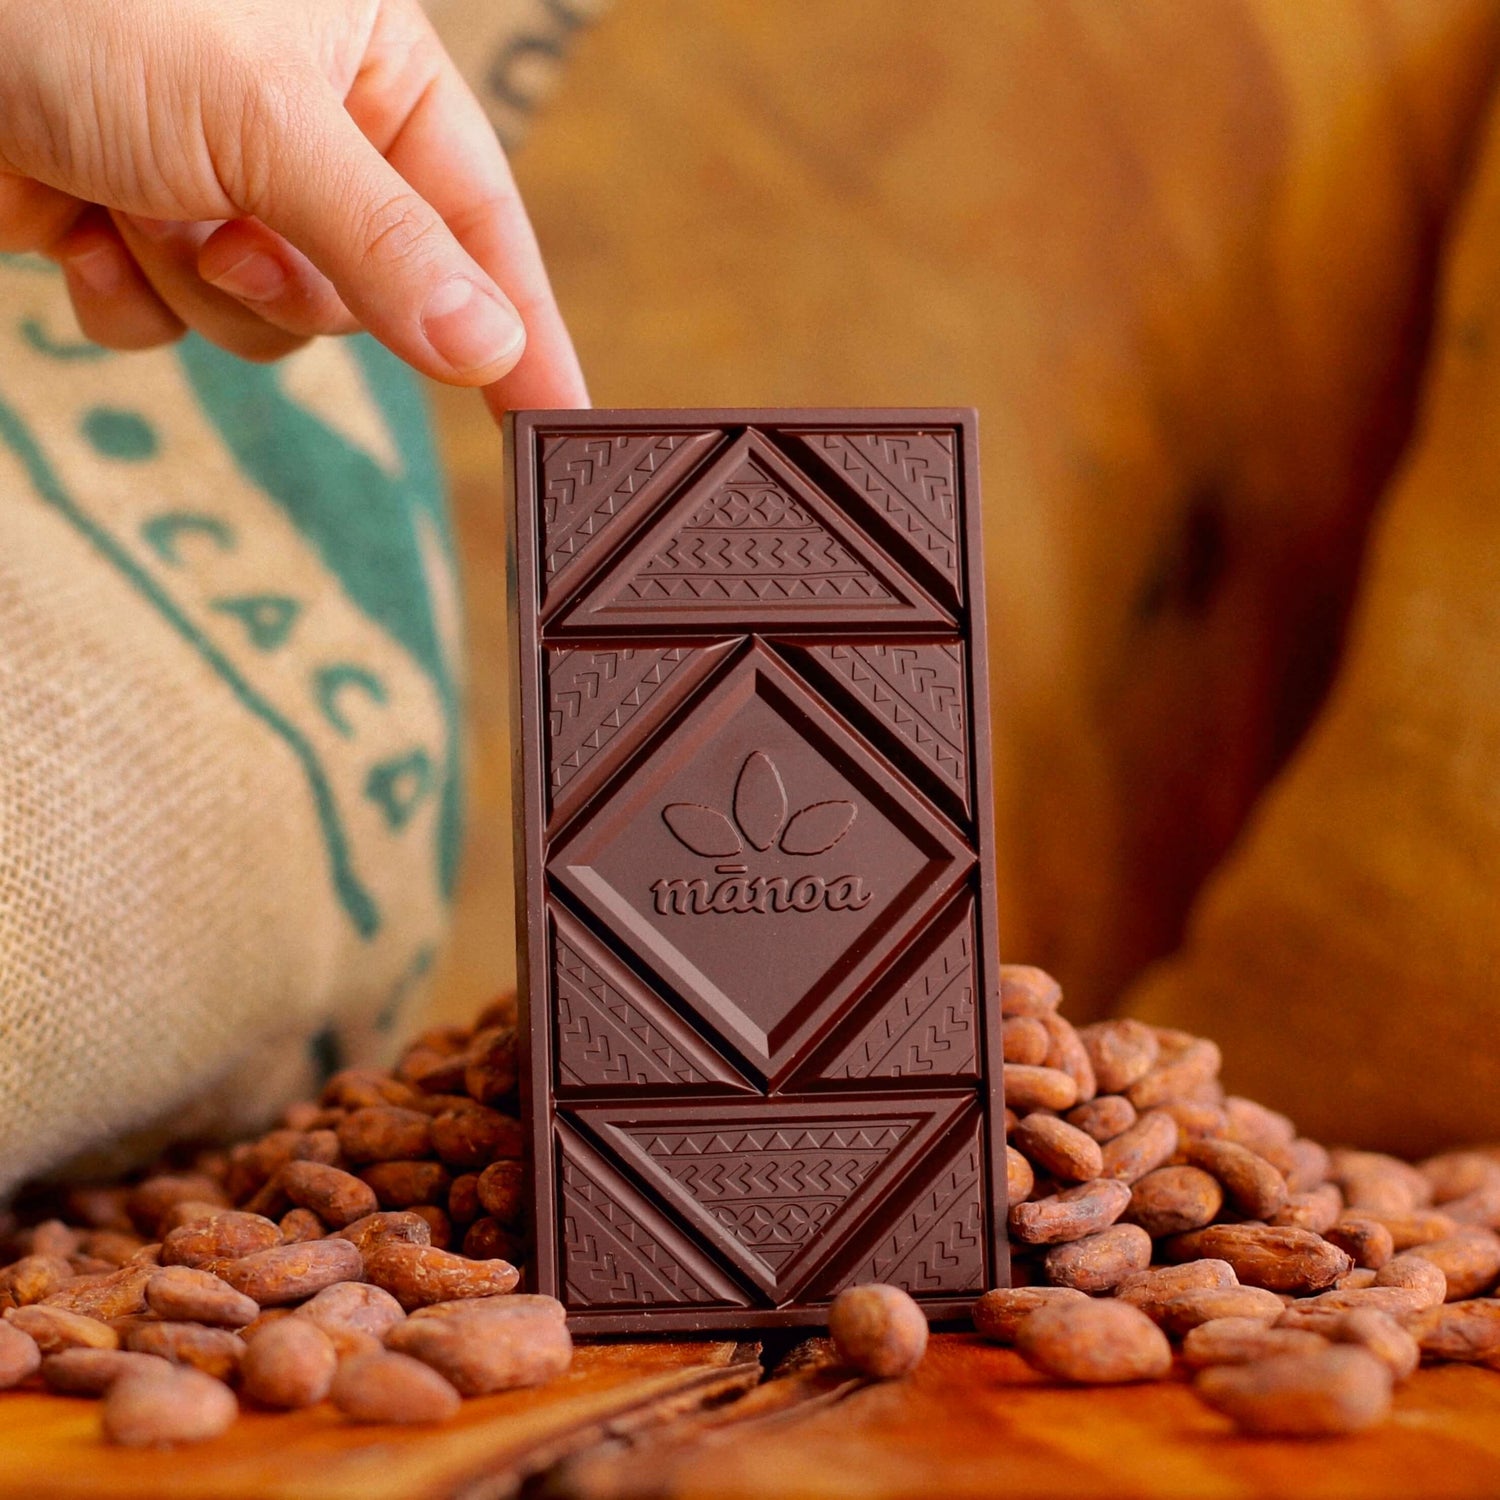 Chocolate bar among cacao beans